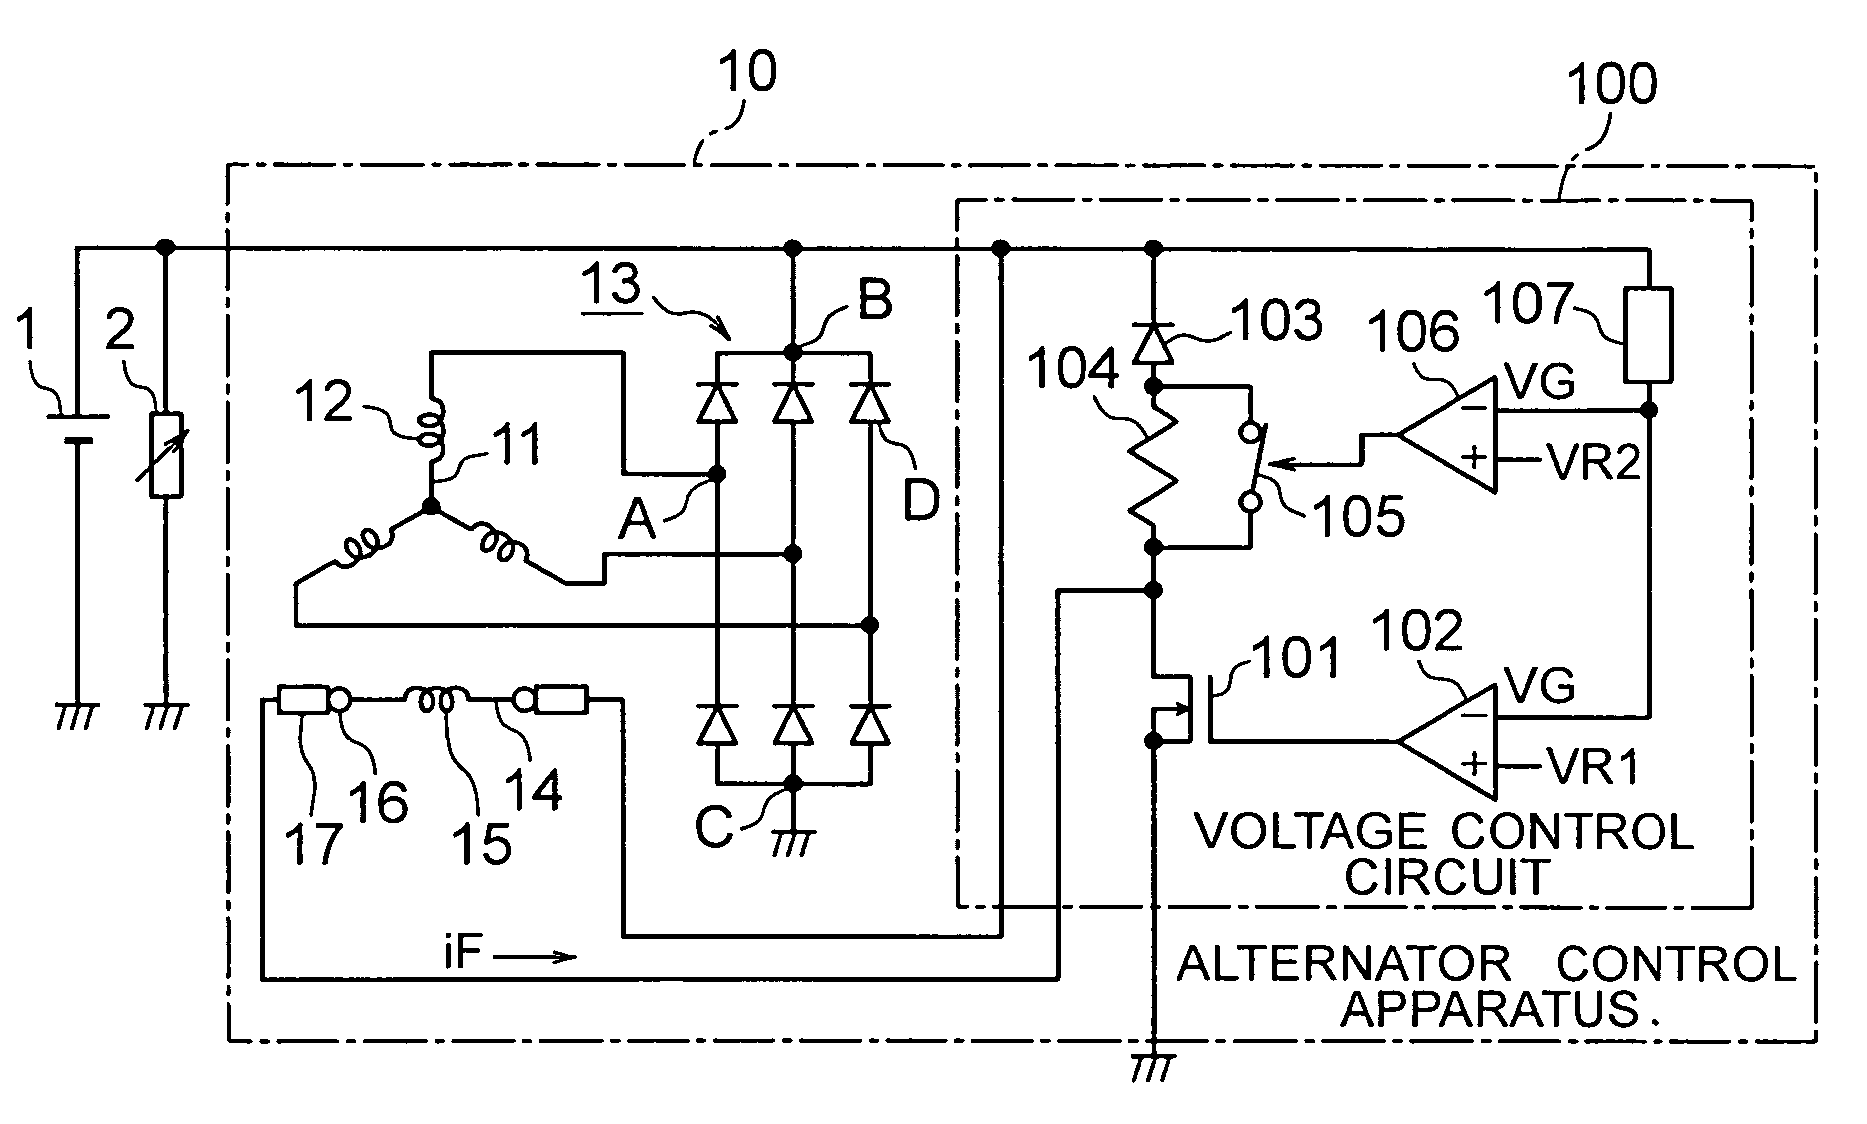 Control apparatus for a vehicular alternator